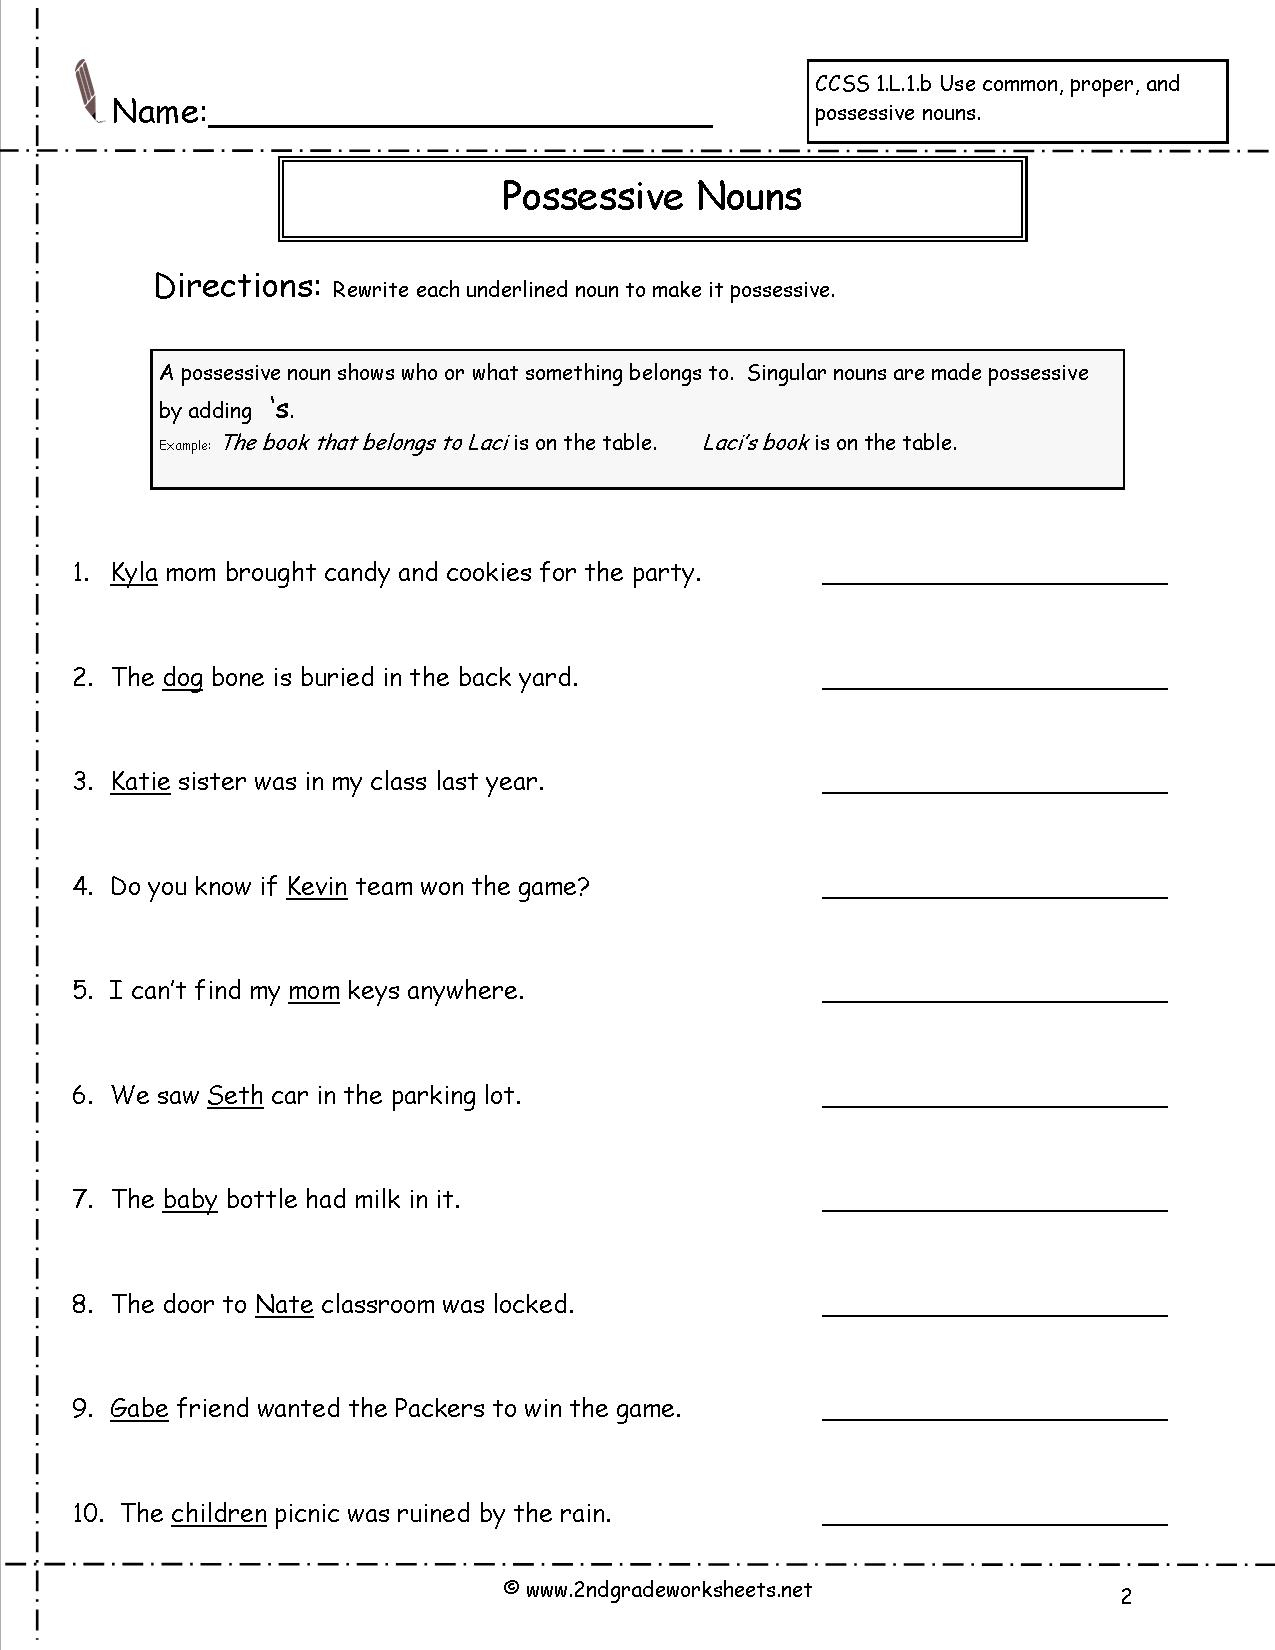 Second Grade Possessive Nouns Worksheets - Free Printable Possessive Nouns Worksheets